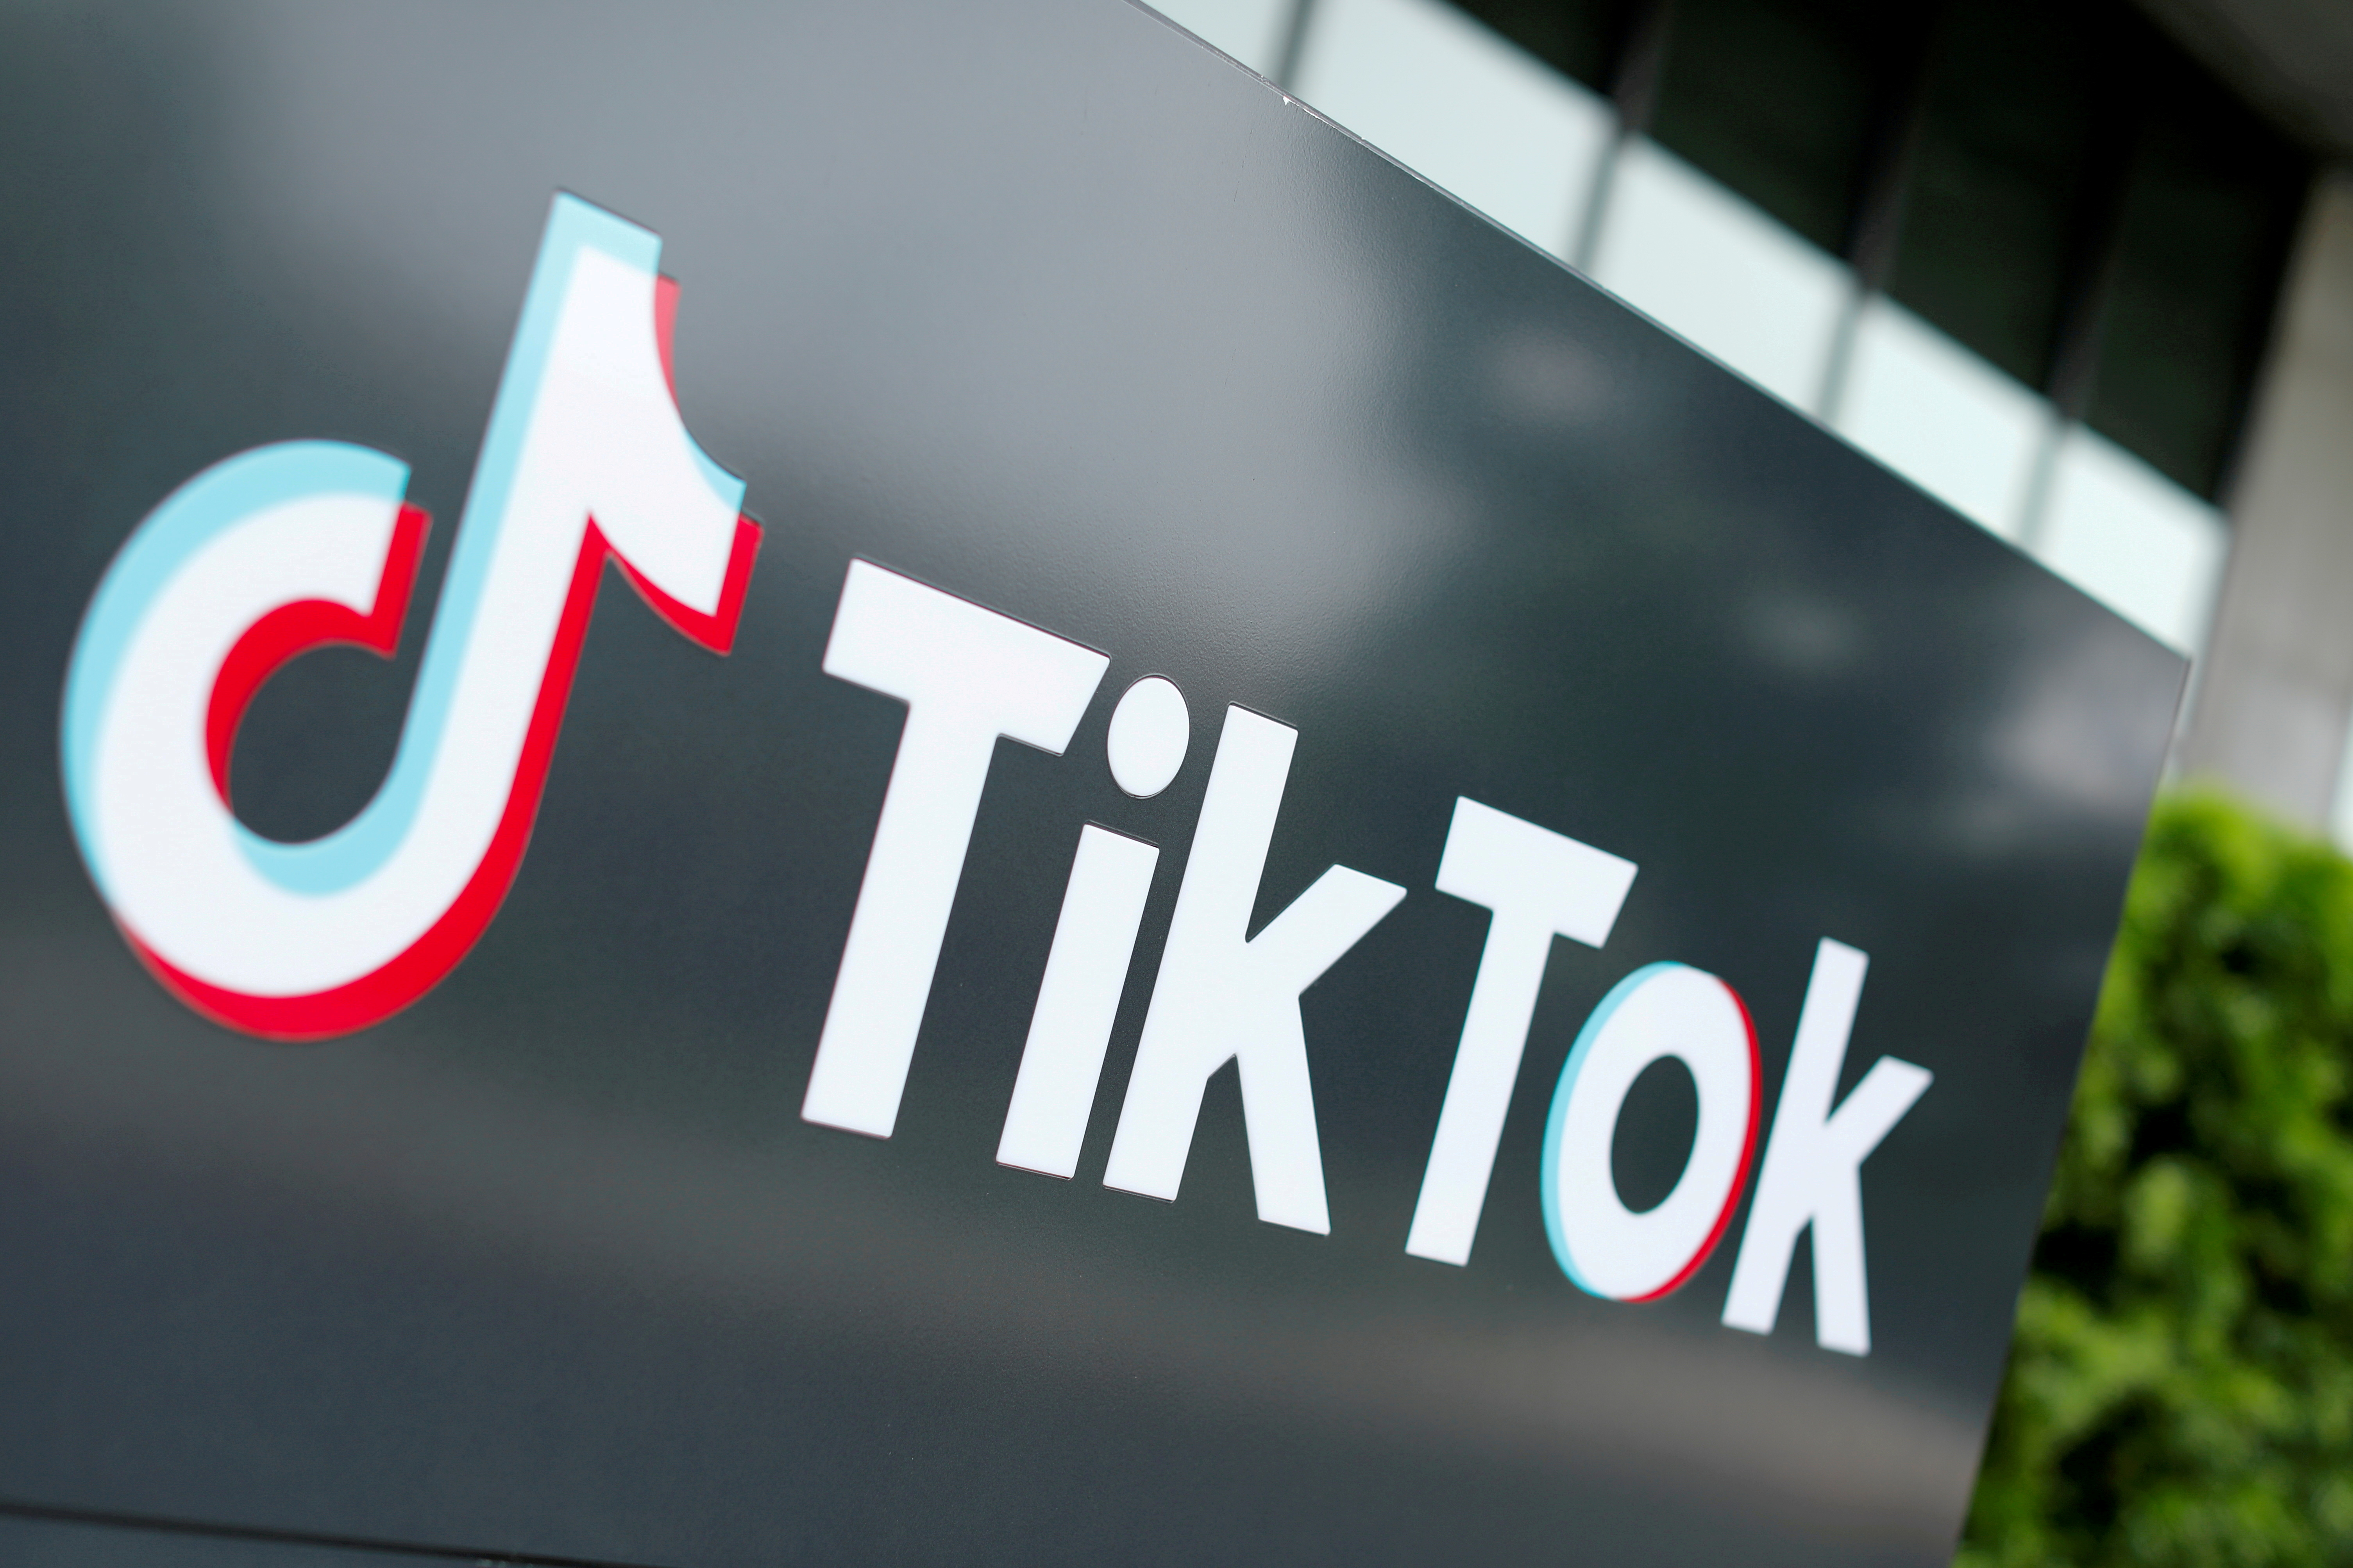 La red social china TikTok creció exponencialmente en 2020
REUTERS/Mike Blake/File Photo